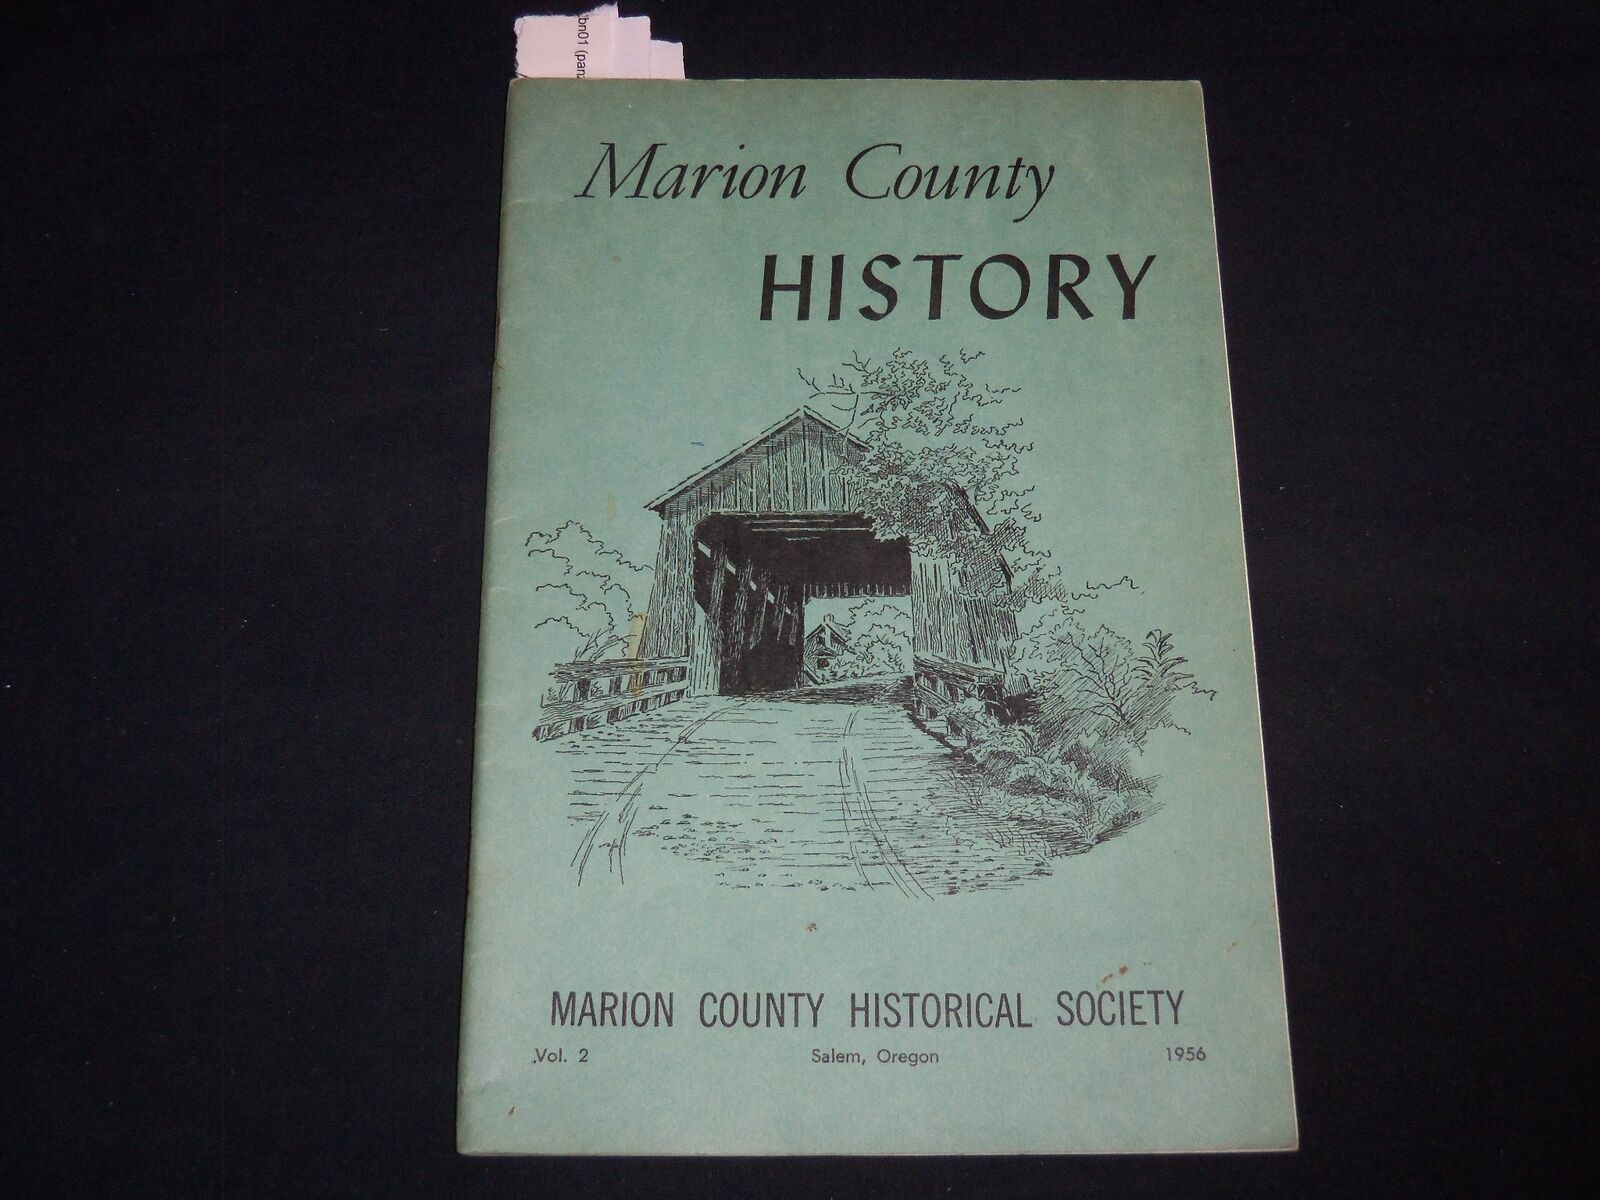 1956 MARION COUNTY HISTORY BOOK - VOLUME 2 - SALEM, OREGON - J 9054